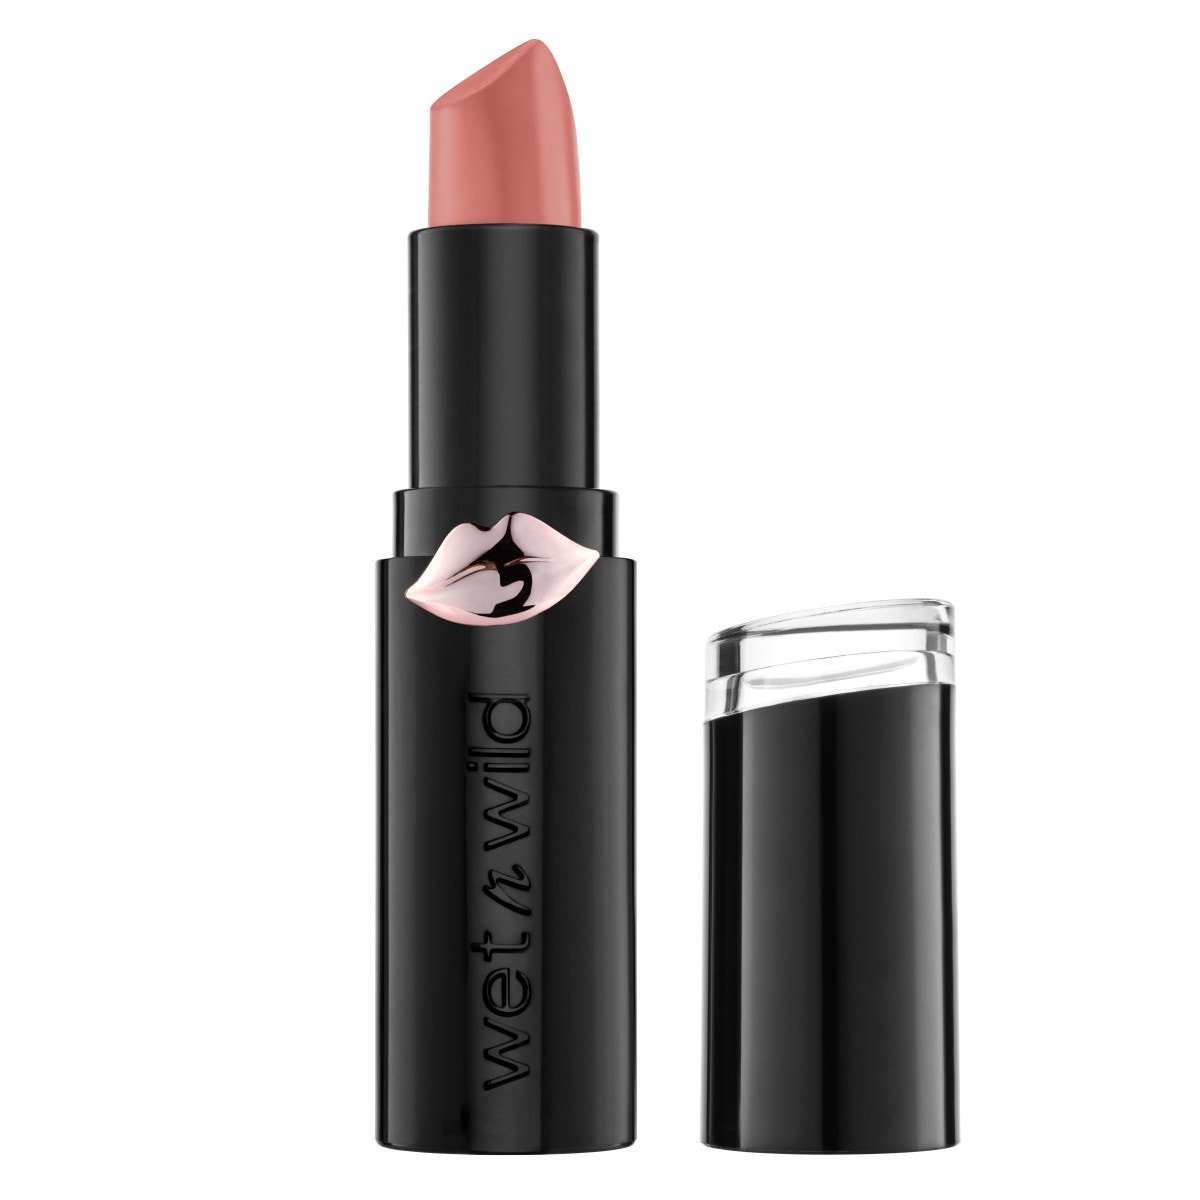 Supreme Slim Lipstick  Best Demi-Matte & Satin Finish Lipstick – Absolute  New York